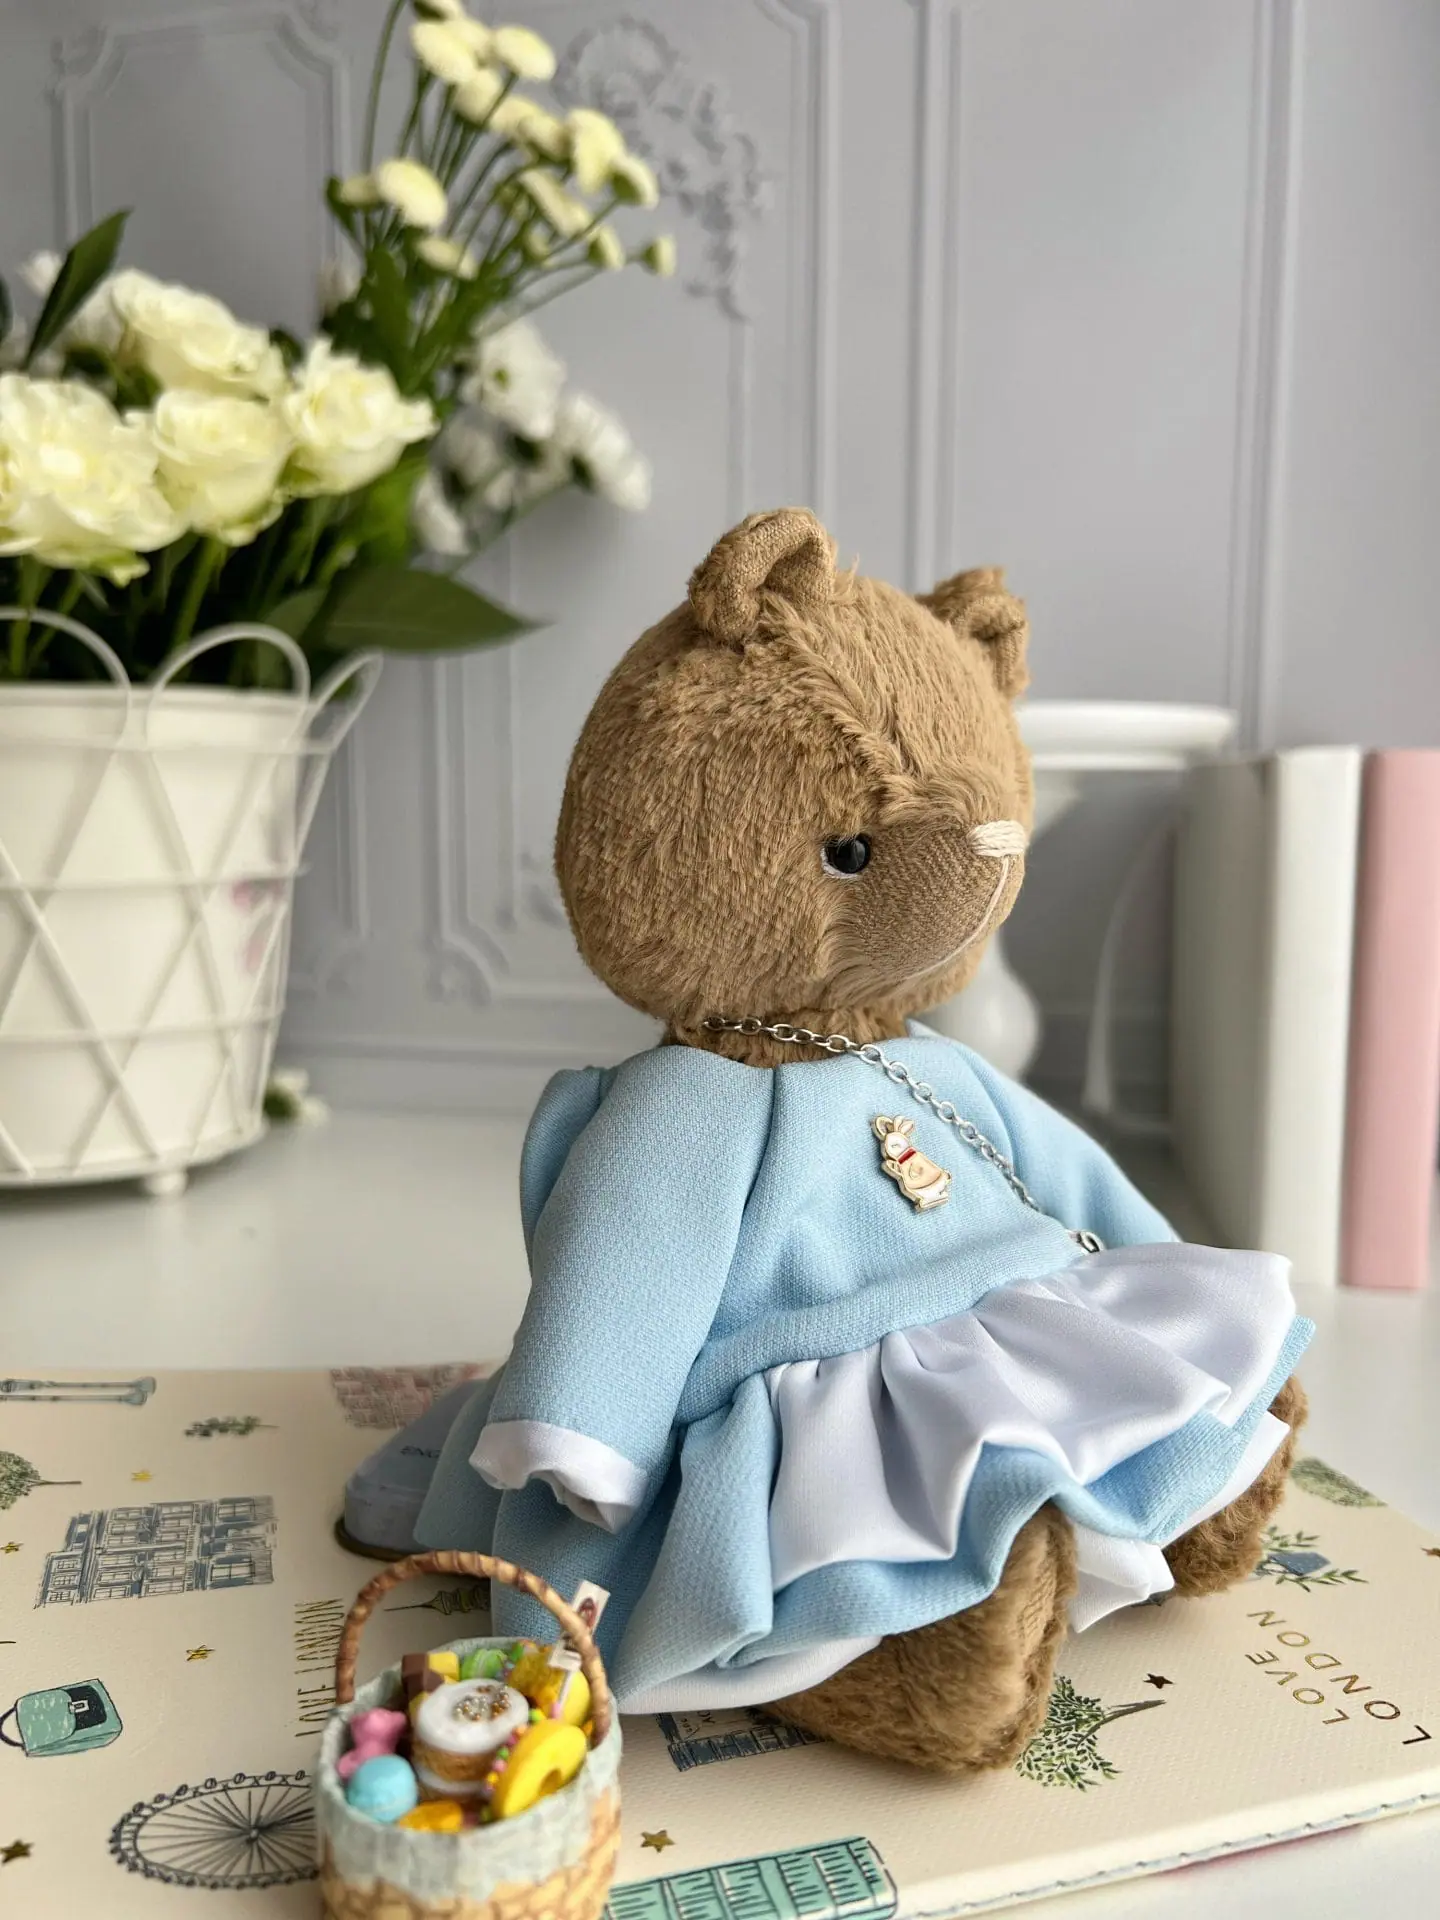 Teddy bear in Alice style - DailyDoll Shop